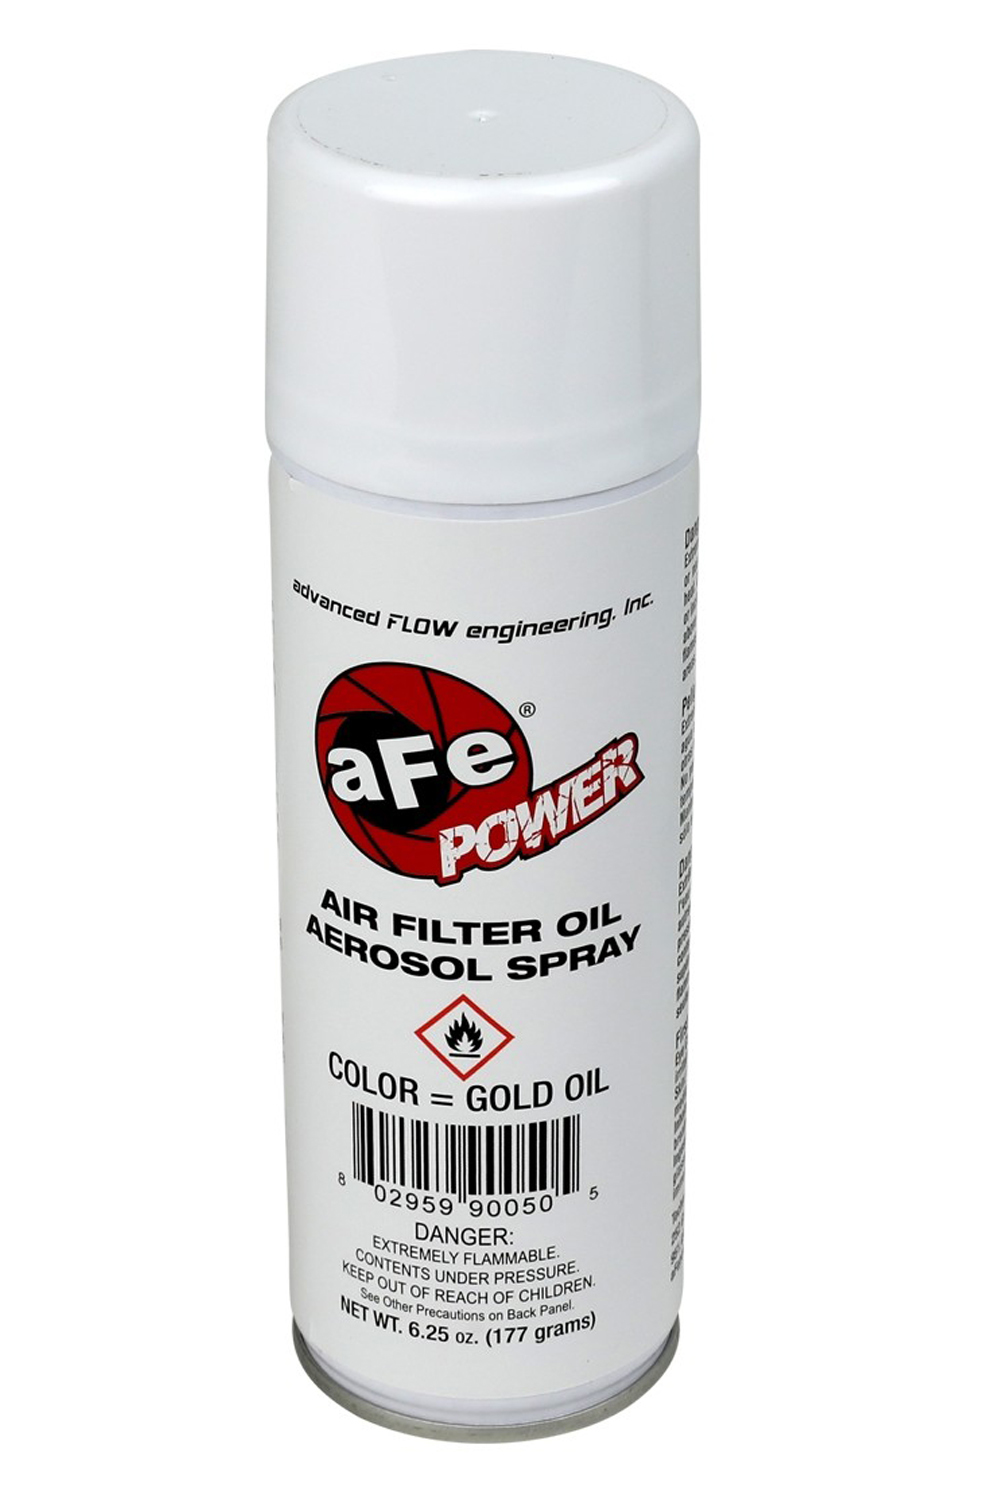 AFE Air Filter Oil, Gold, 6.25 oz Aerosol, Each